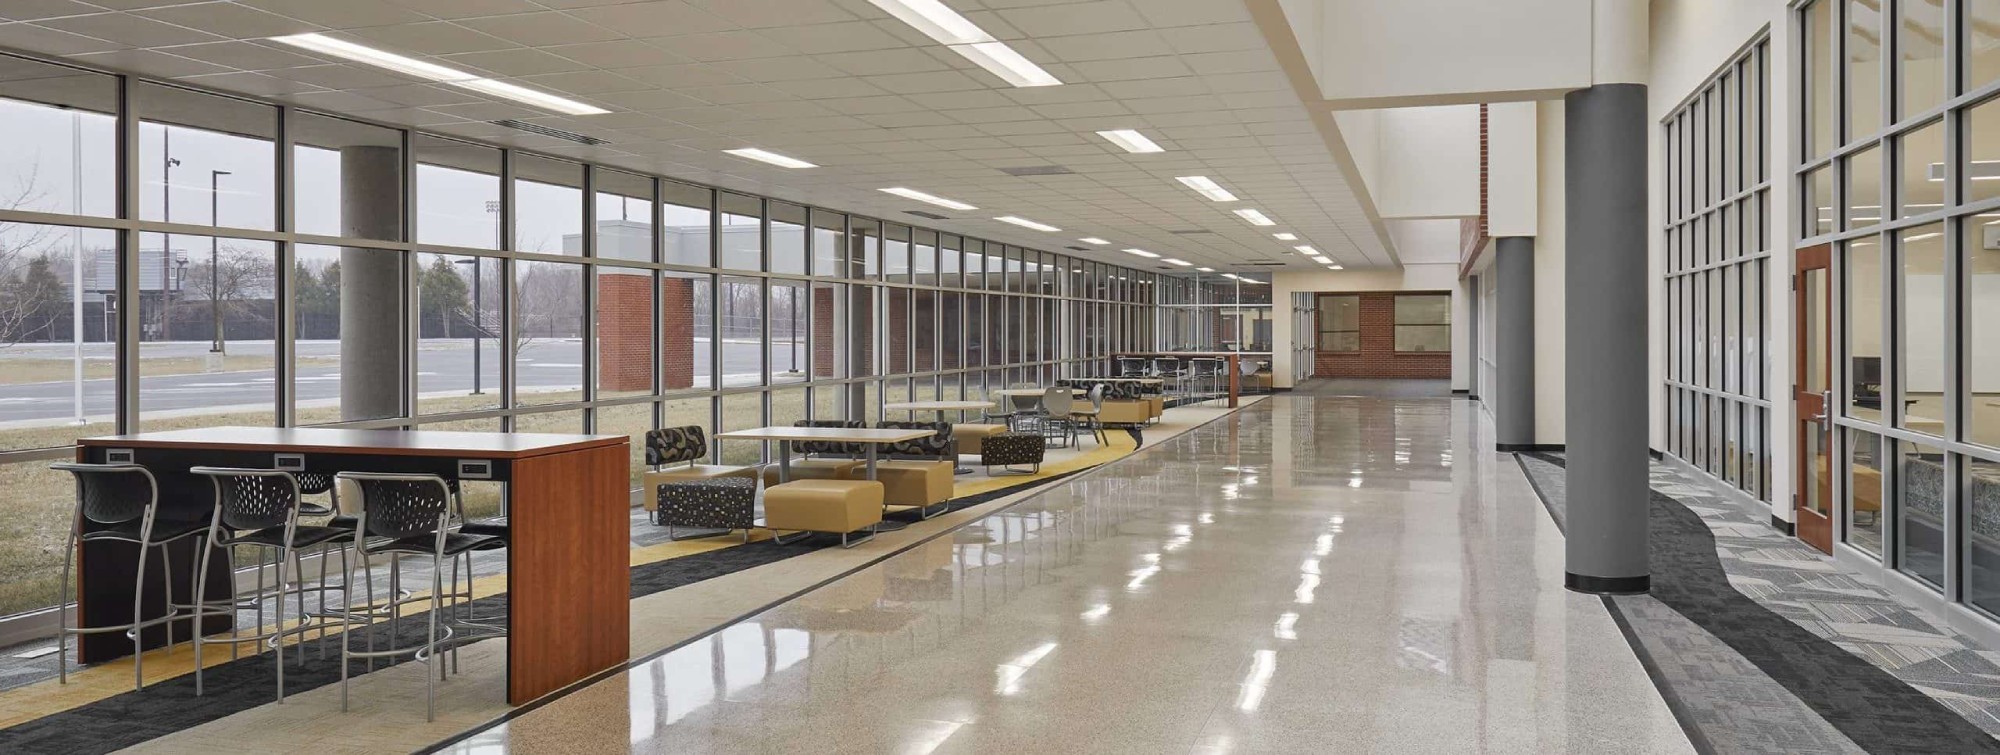 Avon Intermediate School East Corridor